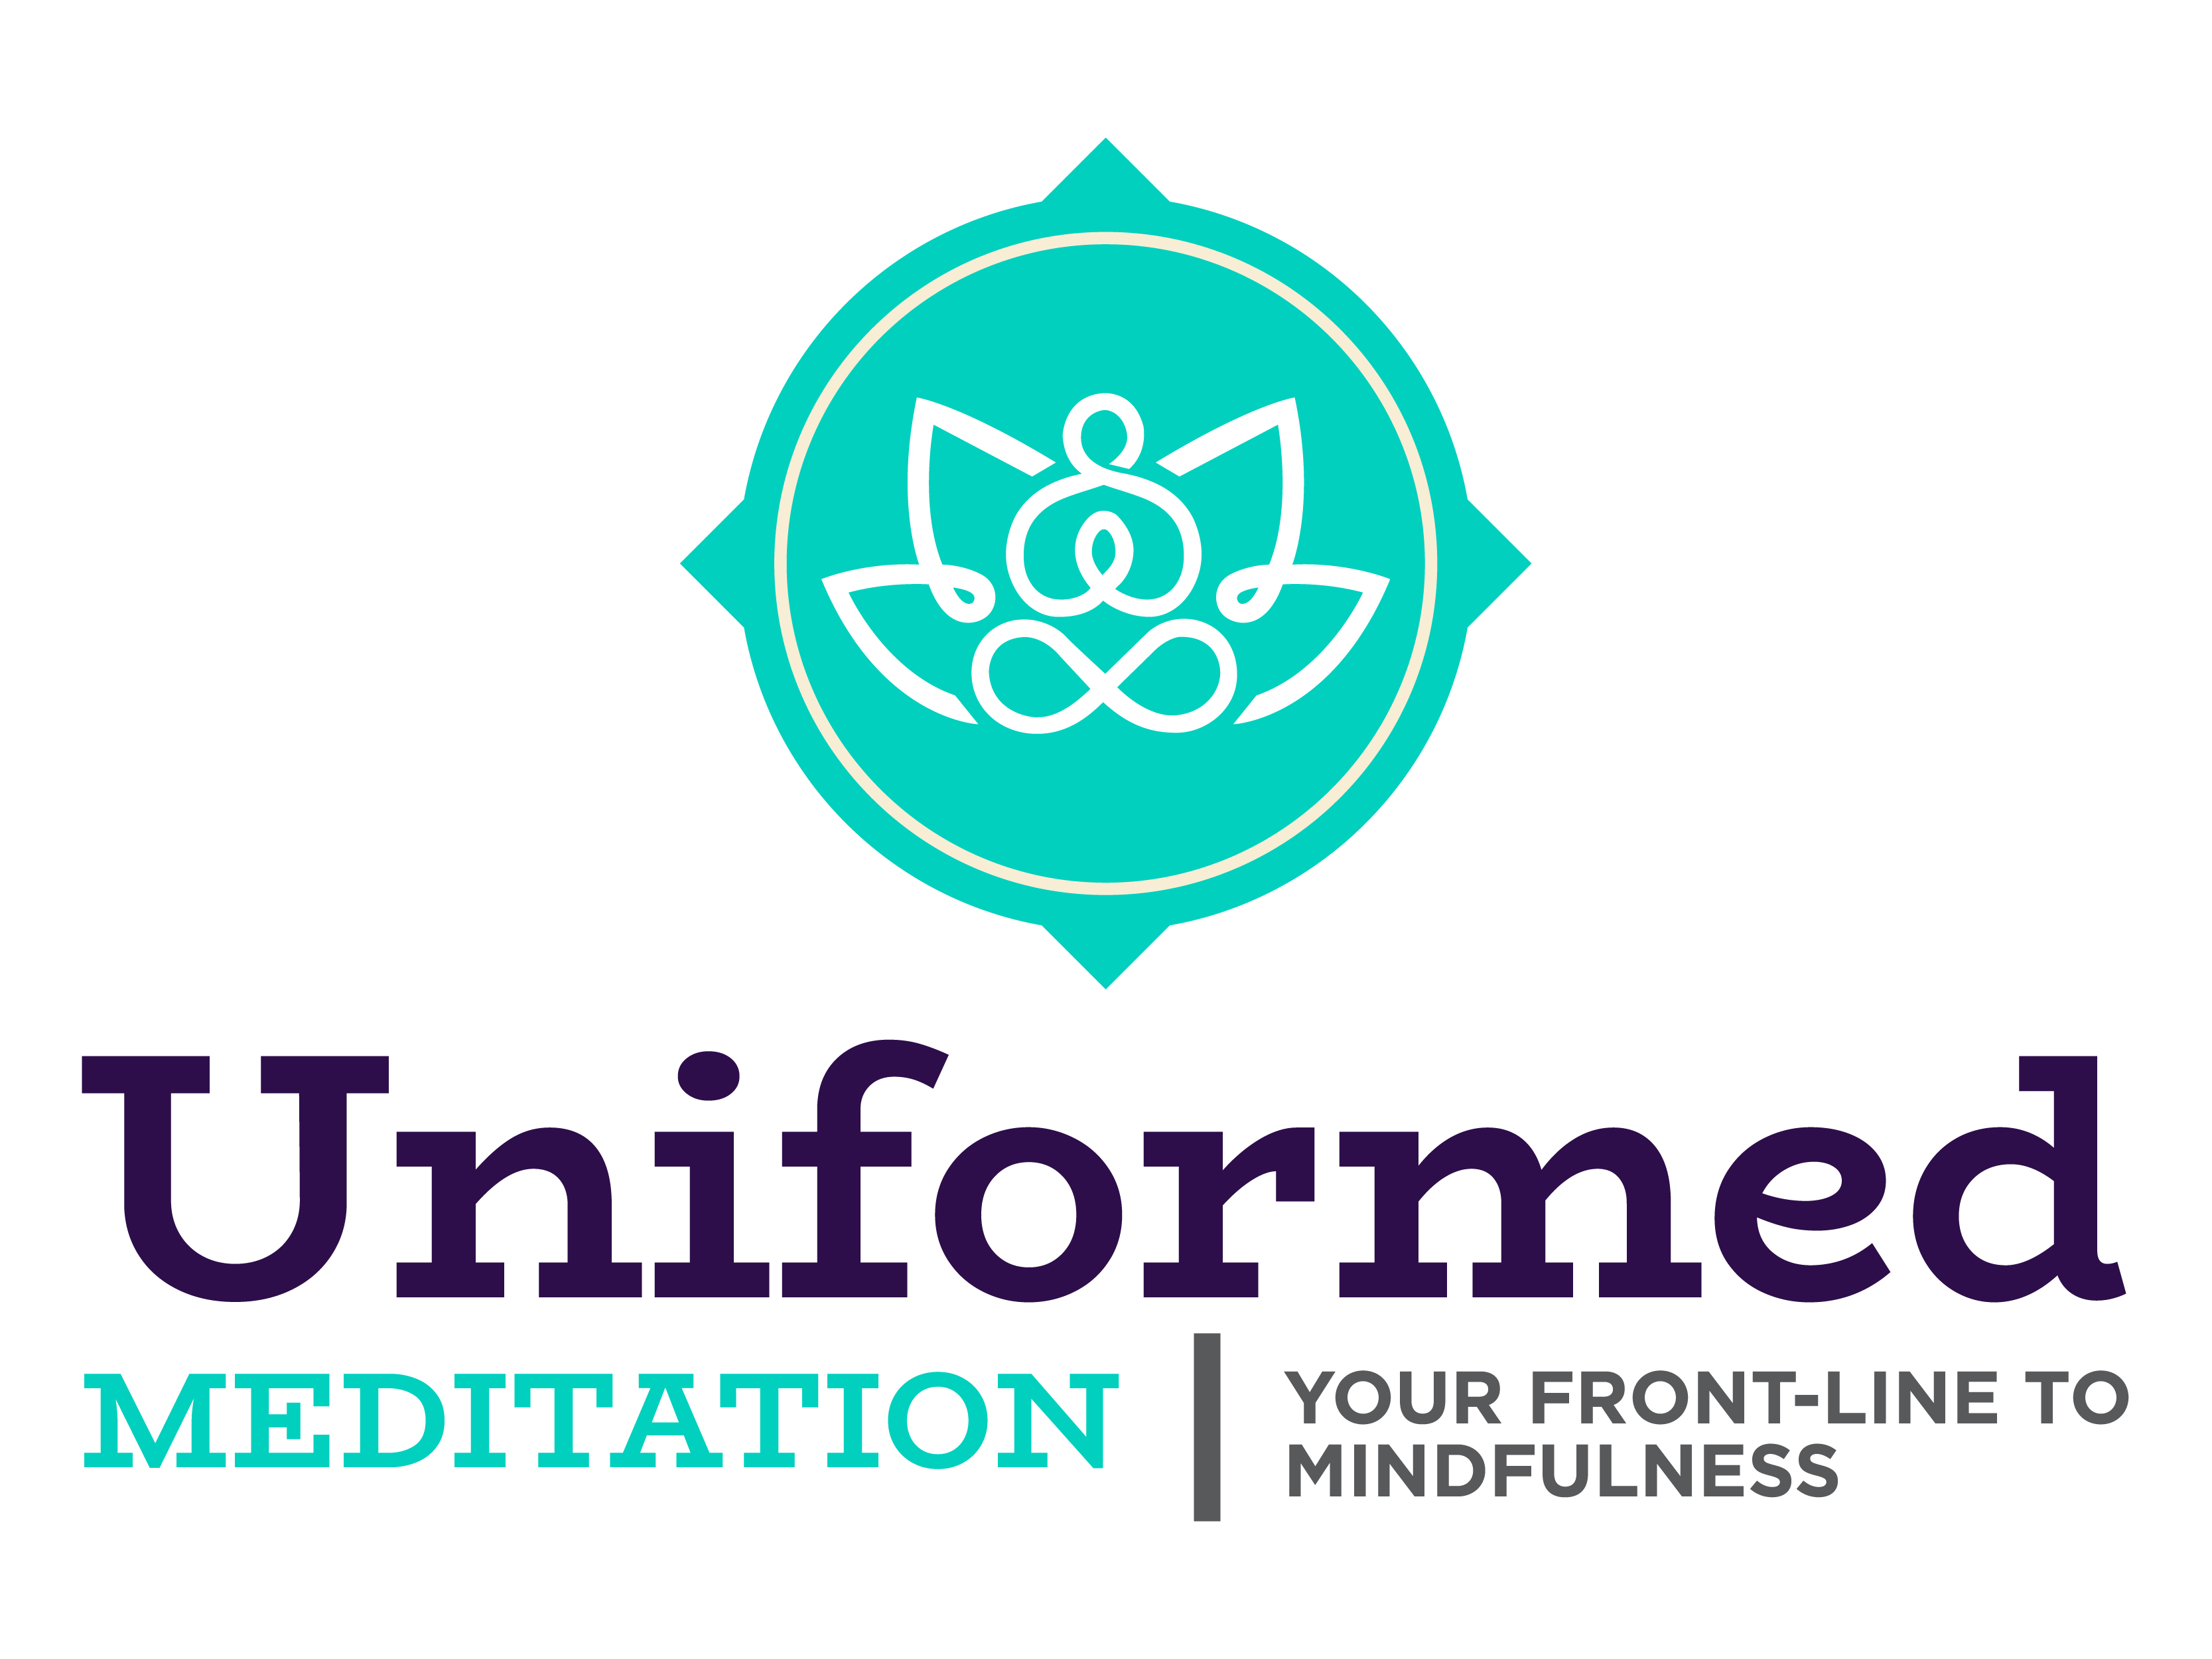 Uniformed Meditation your front-line to mindfulness